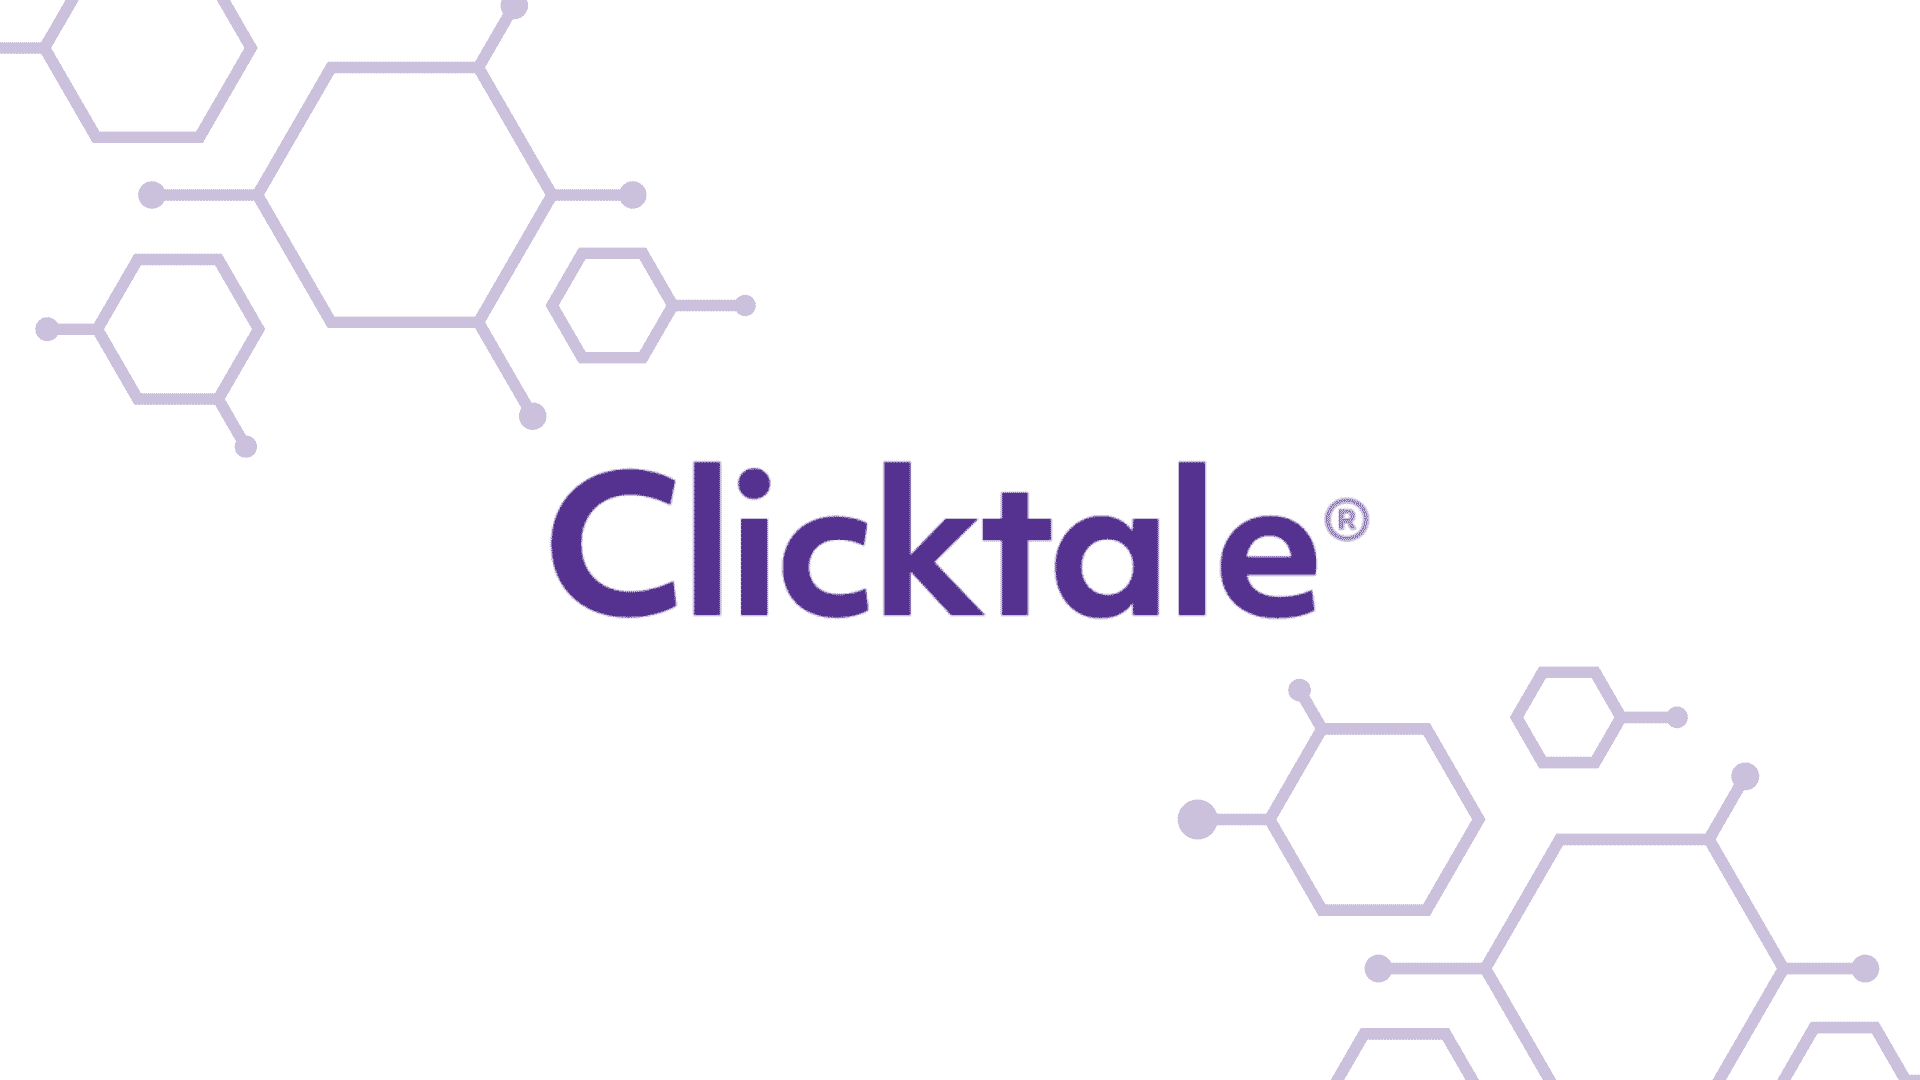 clicktale logo